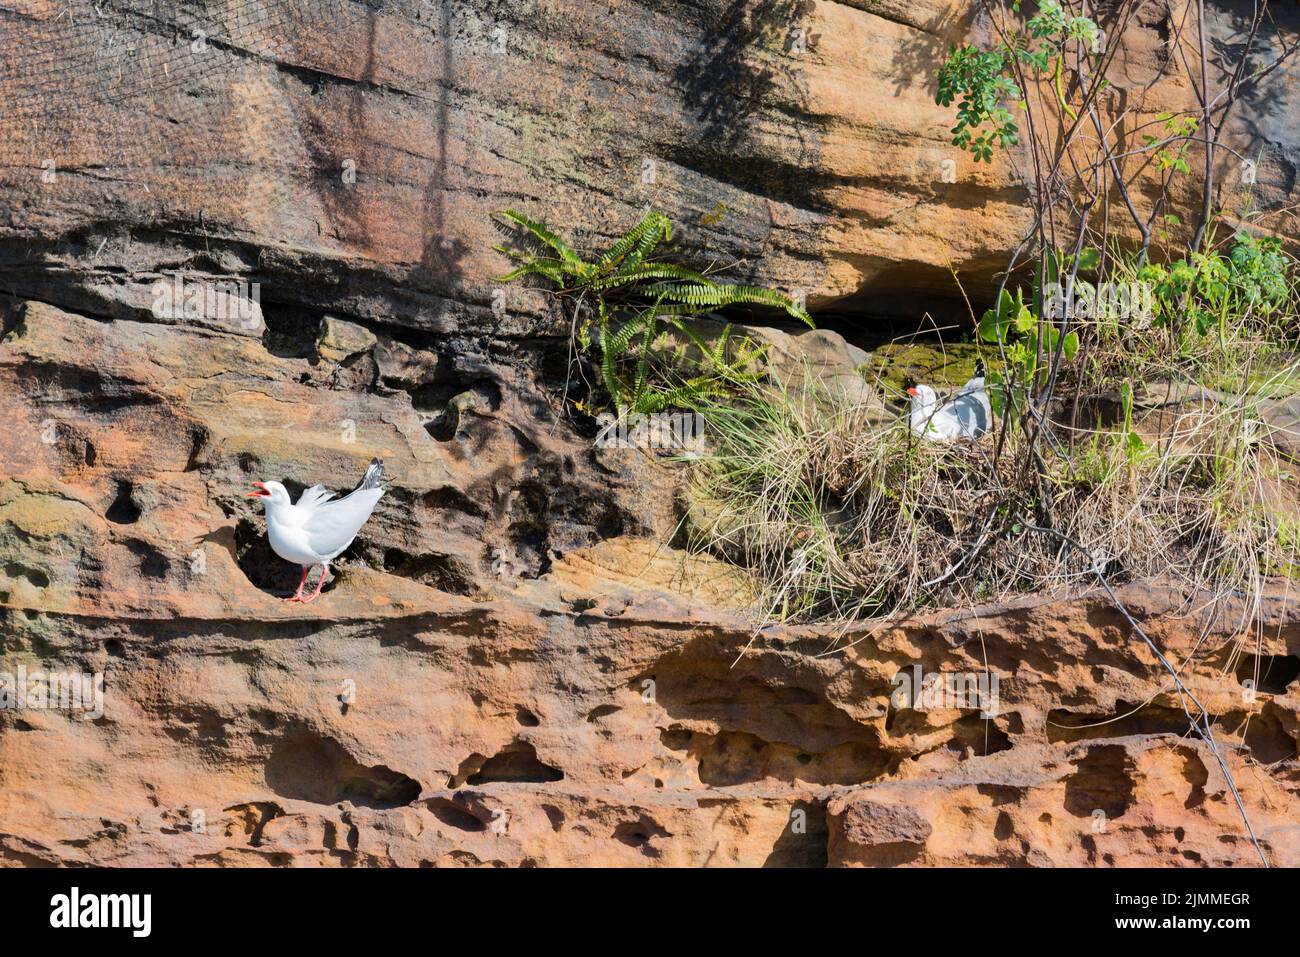 August 2022: Seagulls or Silver Gulls (Chroicocephalus novaehollandiae) nesting in a pocket on a sandstone cliff in Sydney Harbour, Australia Stock Photo